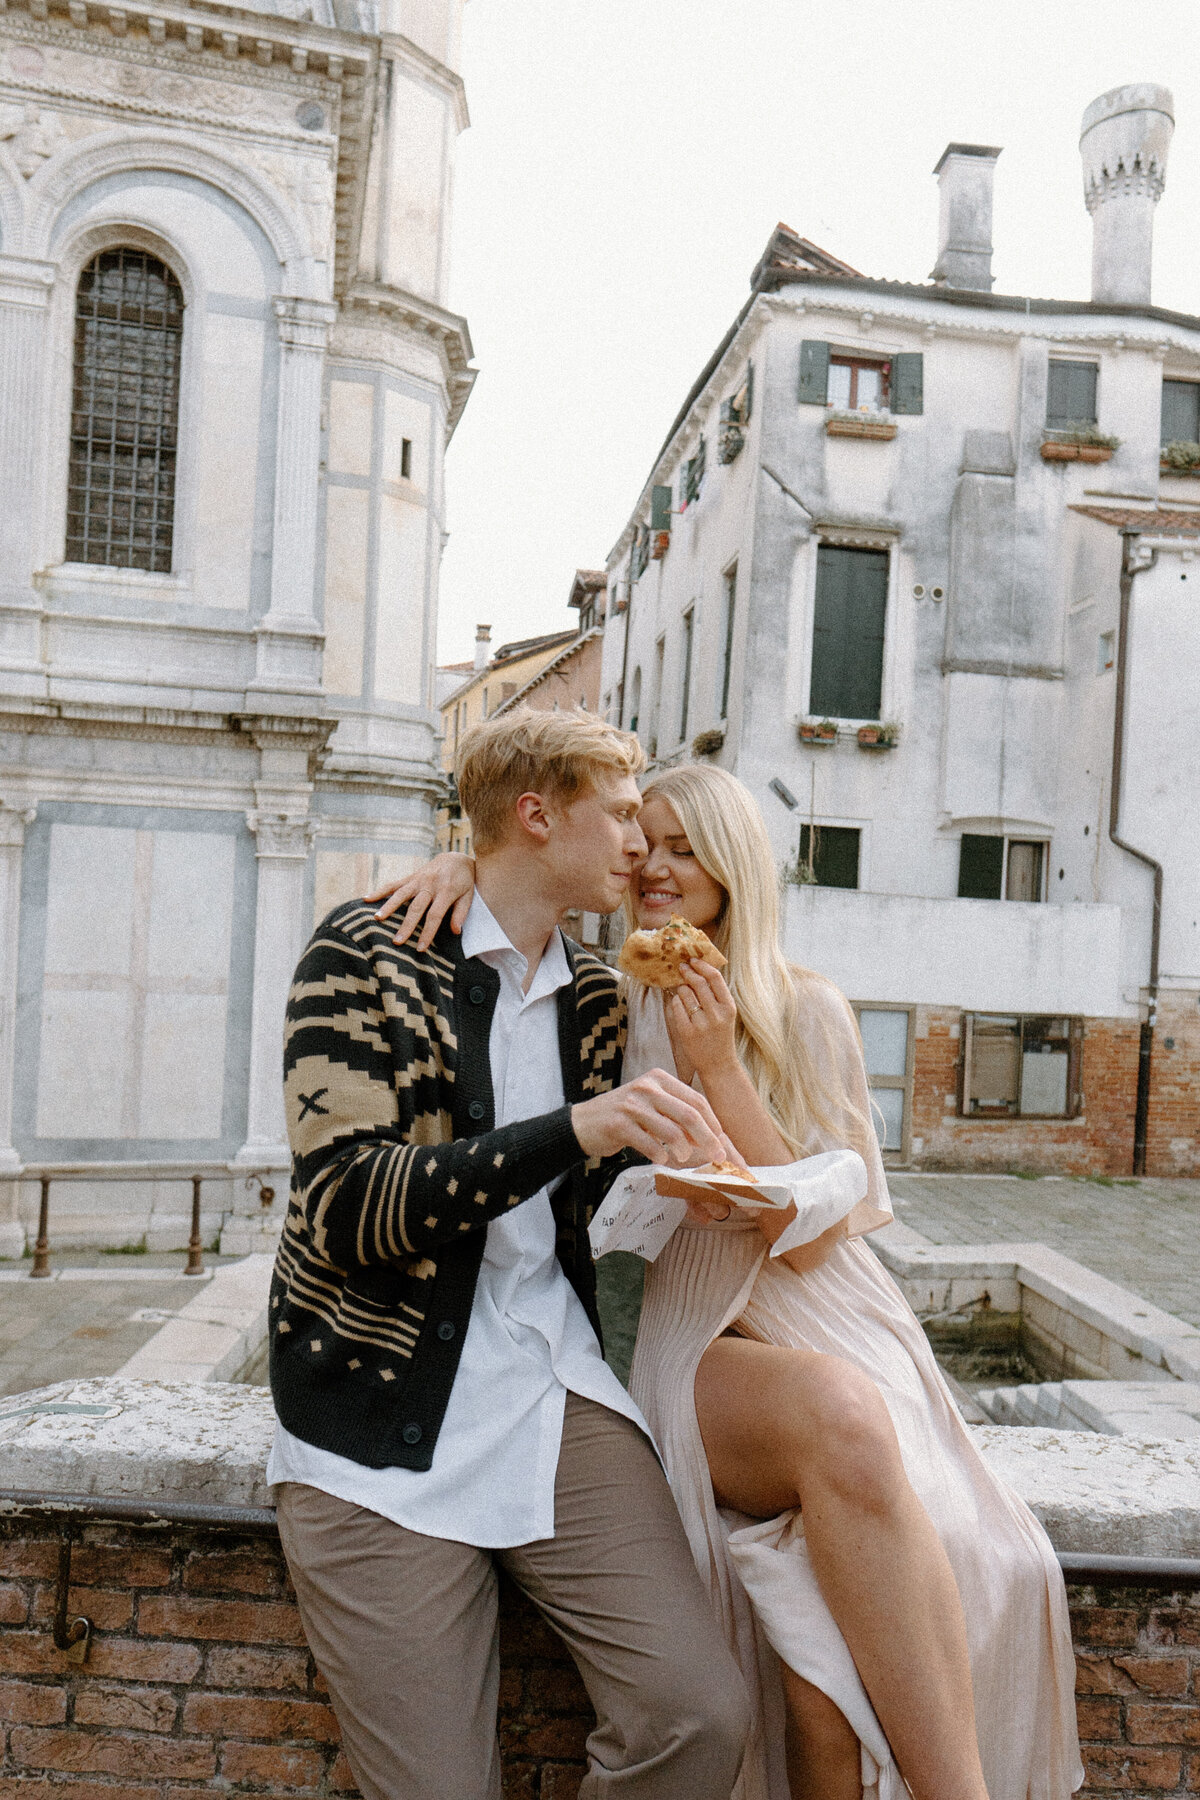 Documentary-Style-Editorial-Vogue-Italy-Destination-Wedding-Leah-Gunn-Photography-58